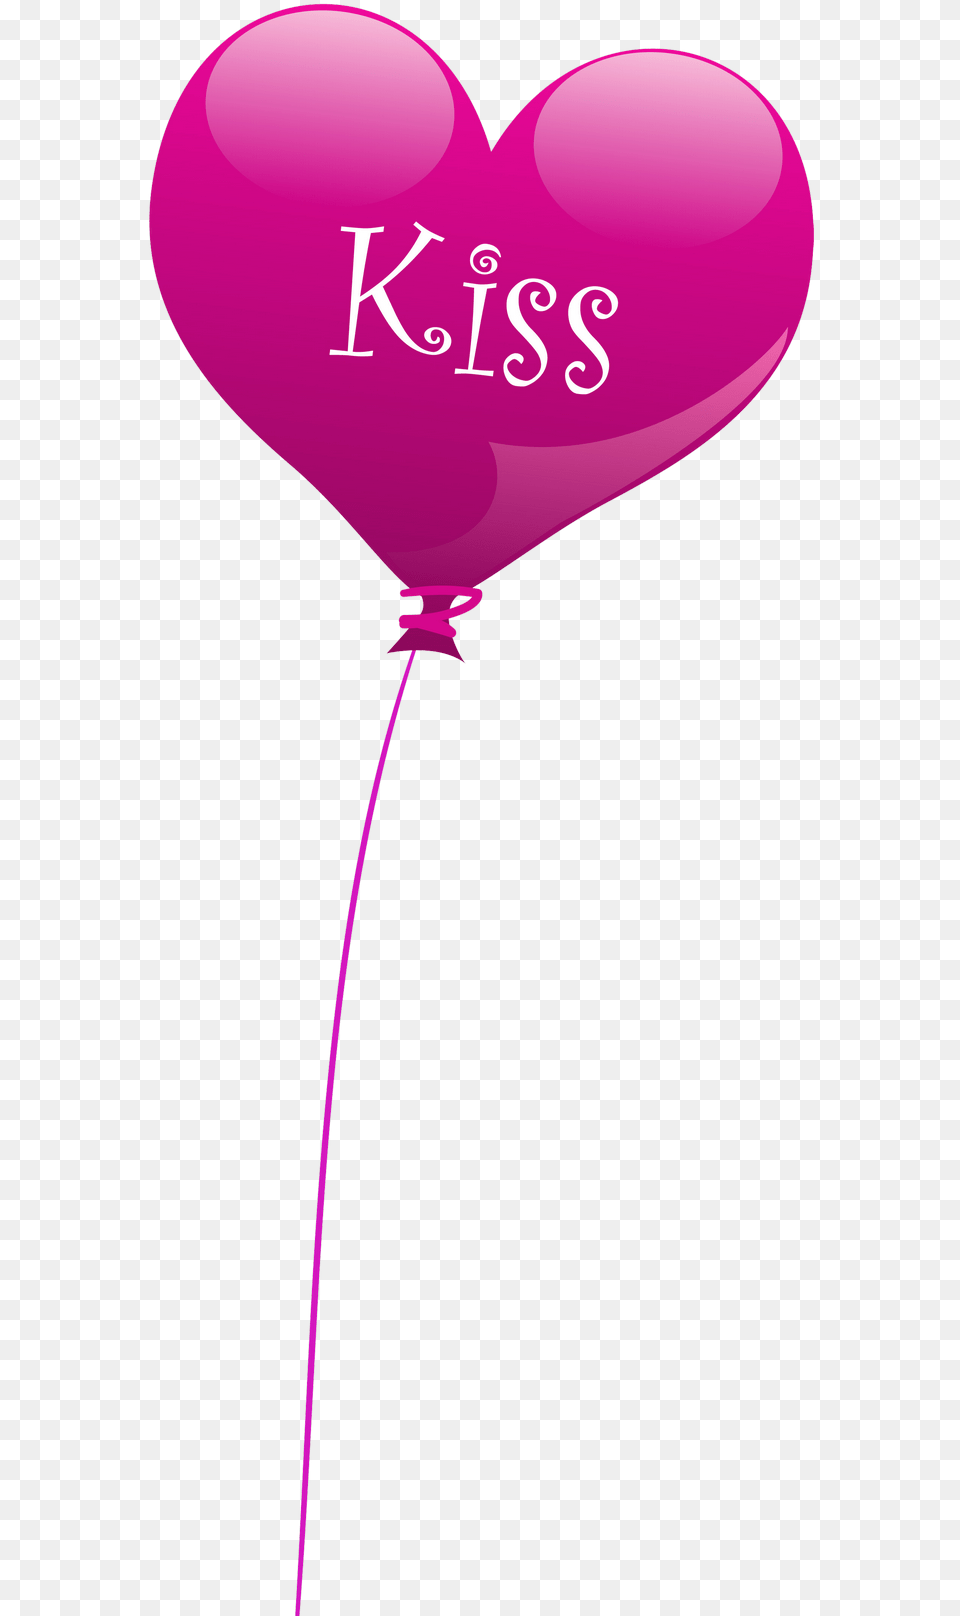 Heart Kiss Balloon Clipart Balloons Clip Clip Art, Smoke Pipe Png Image